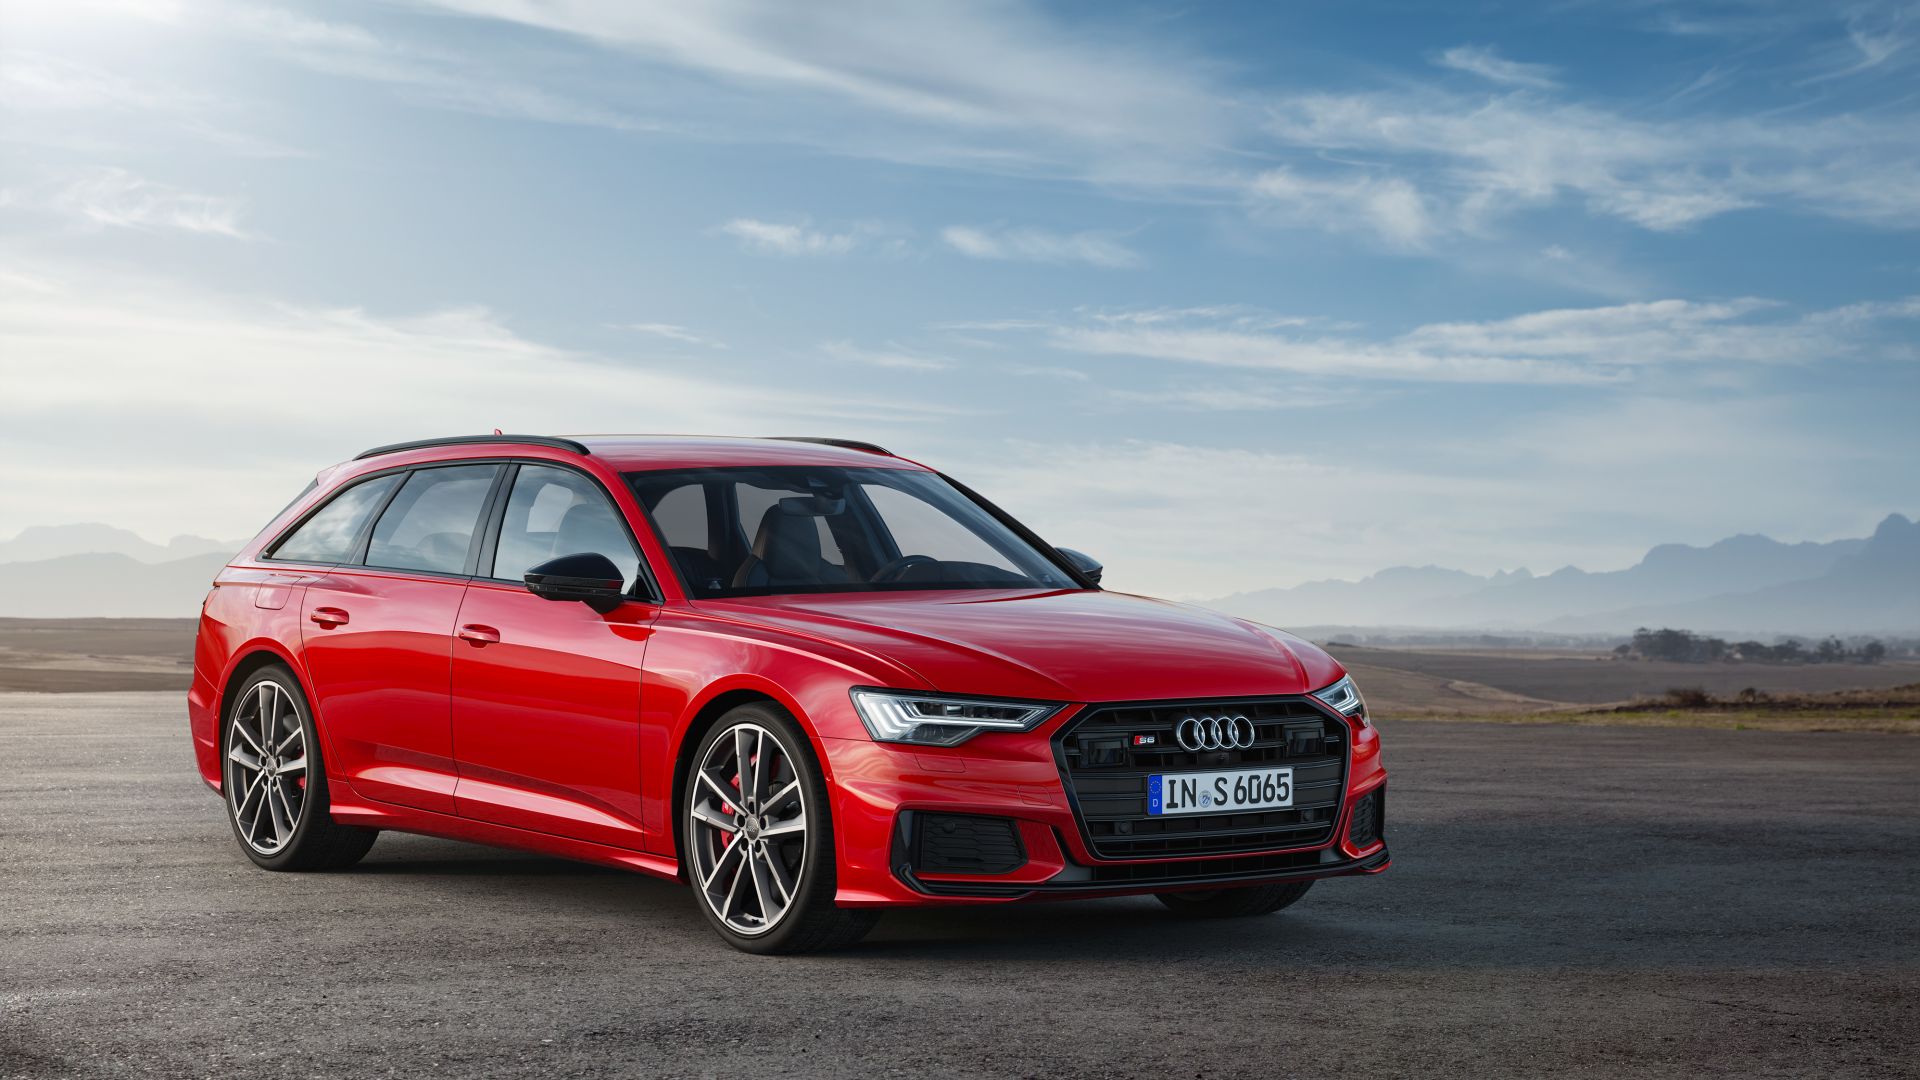 2019 Audi S6 Avant Specs & Photos - autoevolution